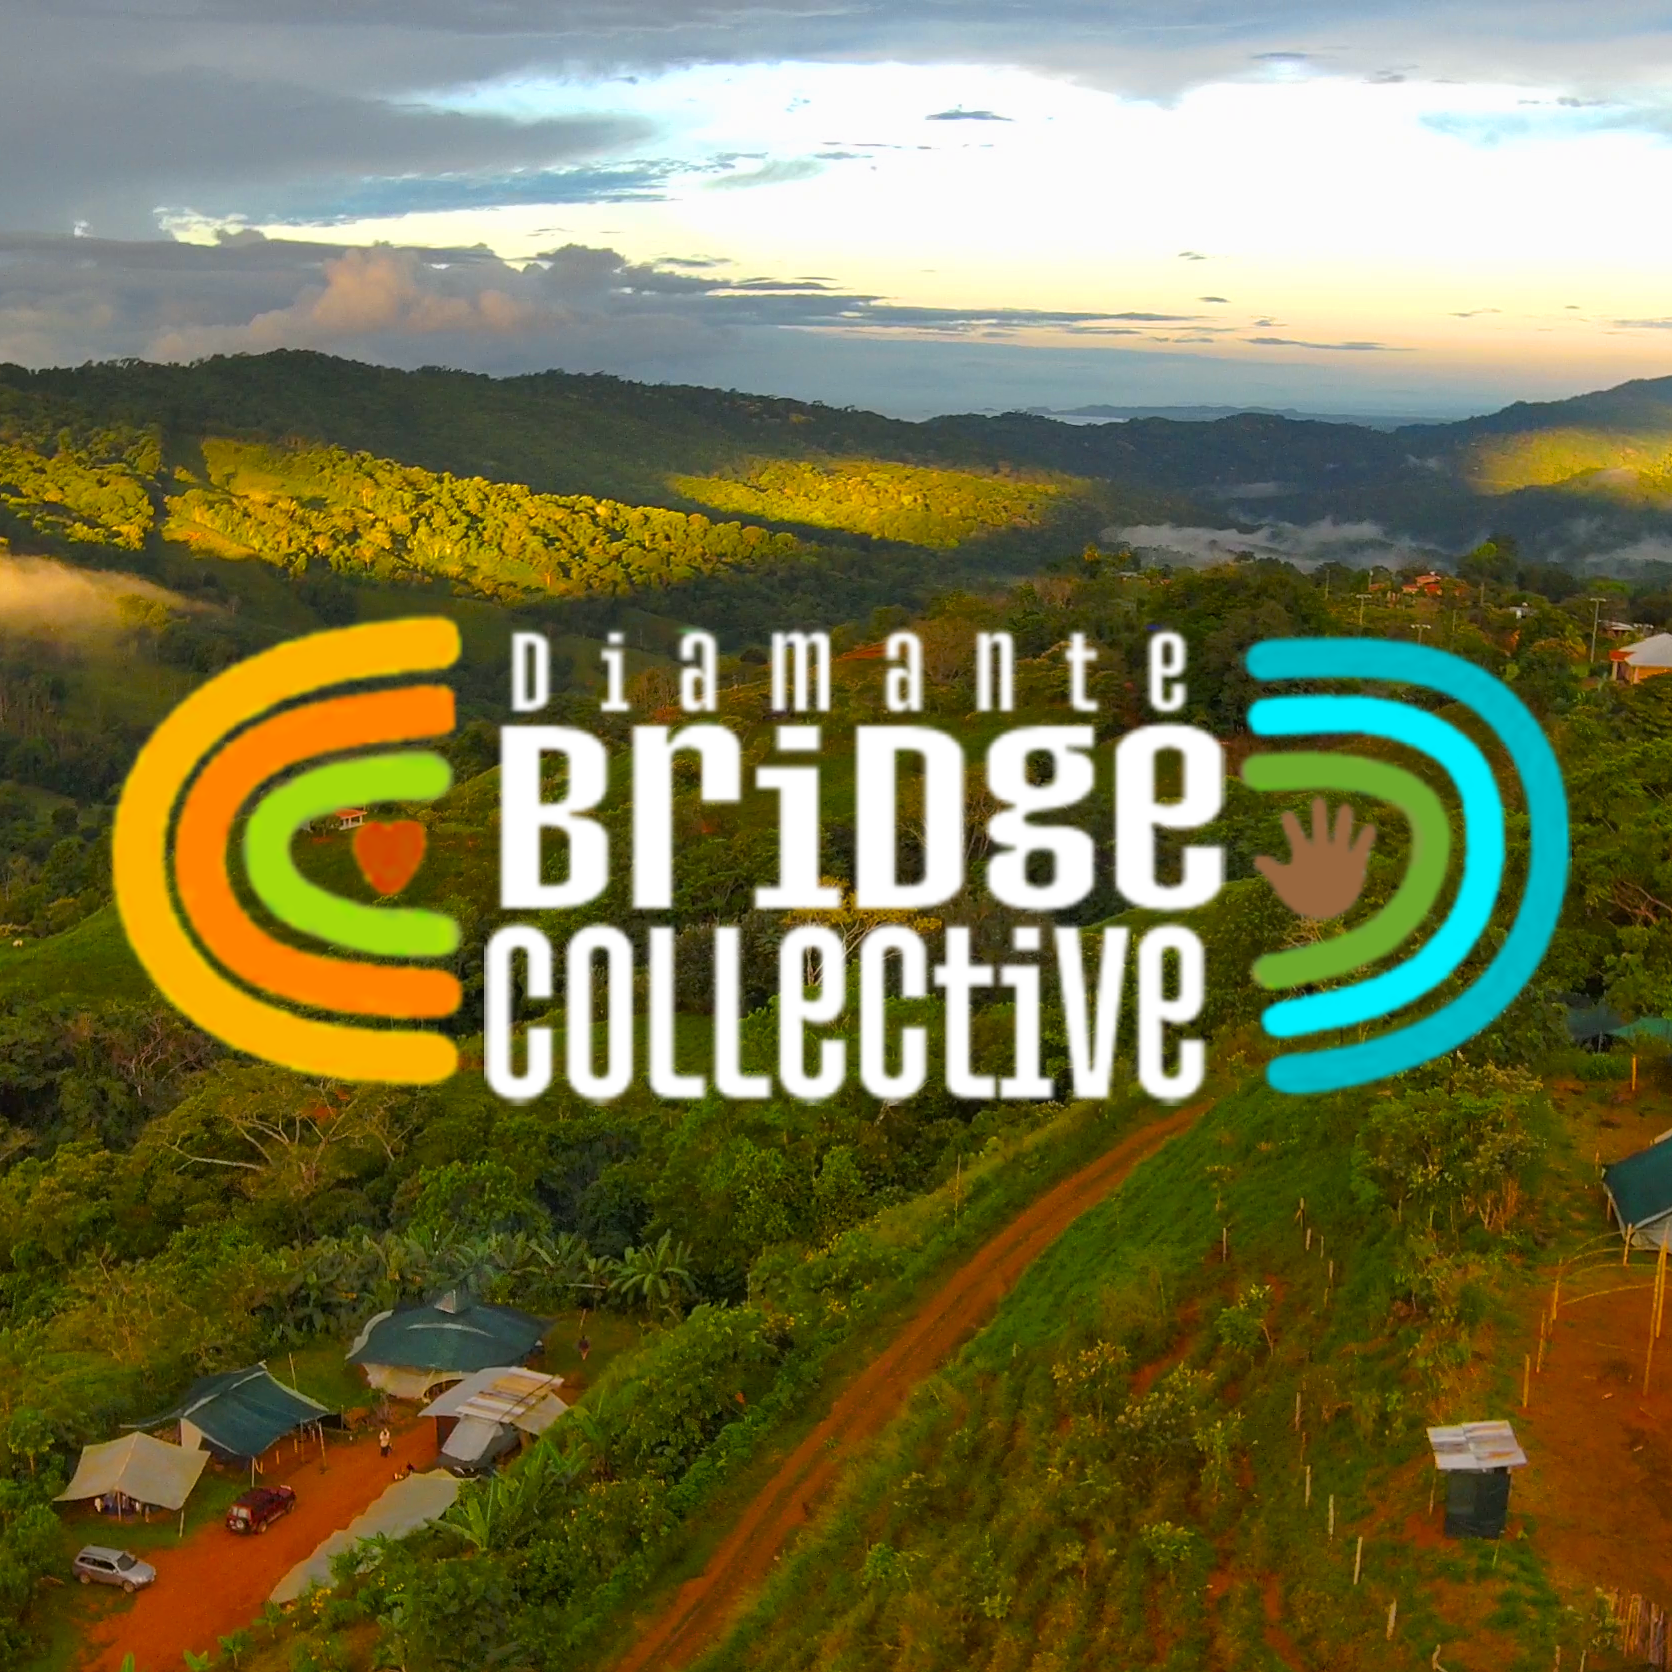 Diamante Bridge Collective